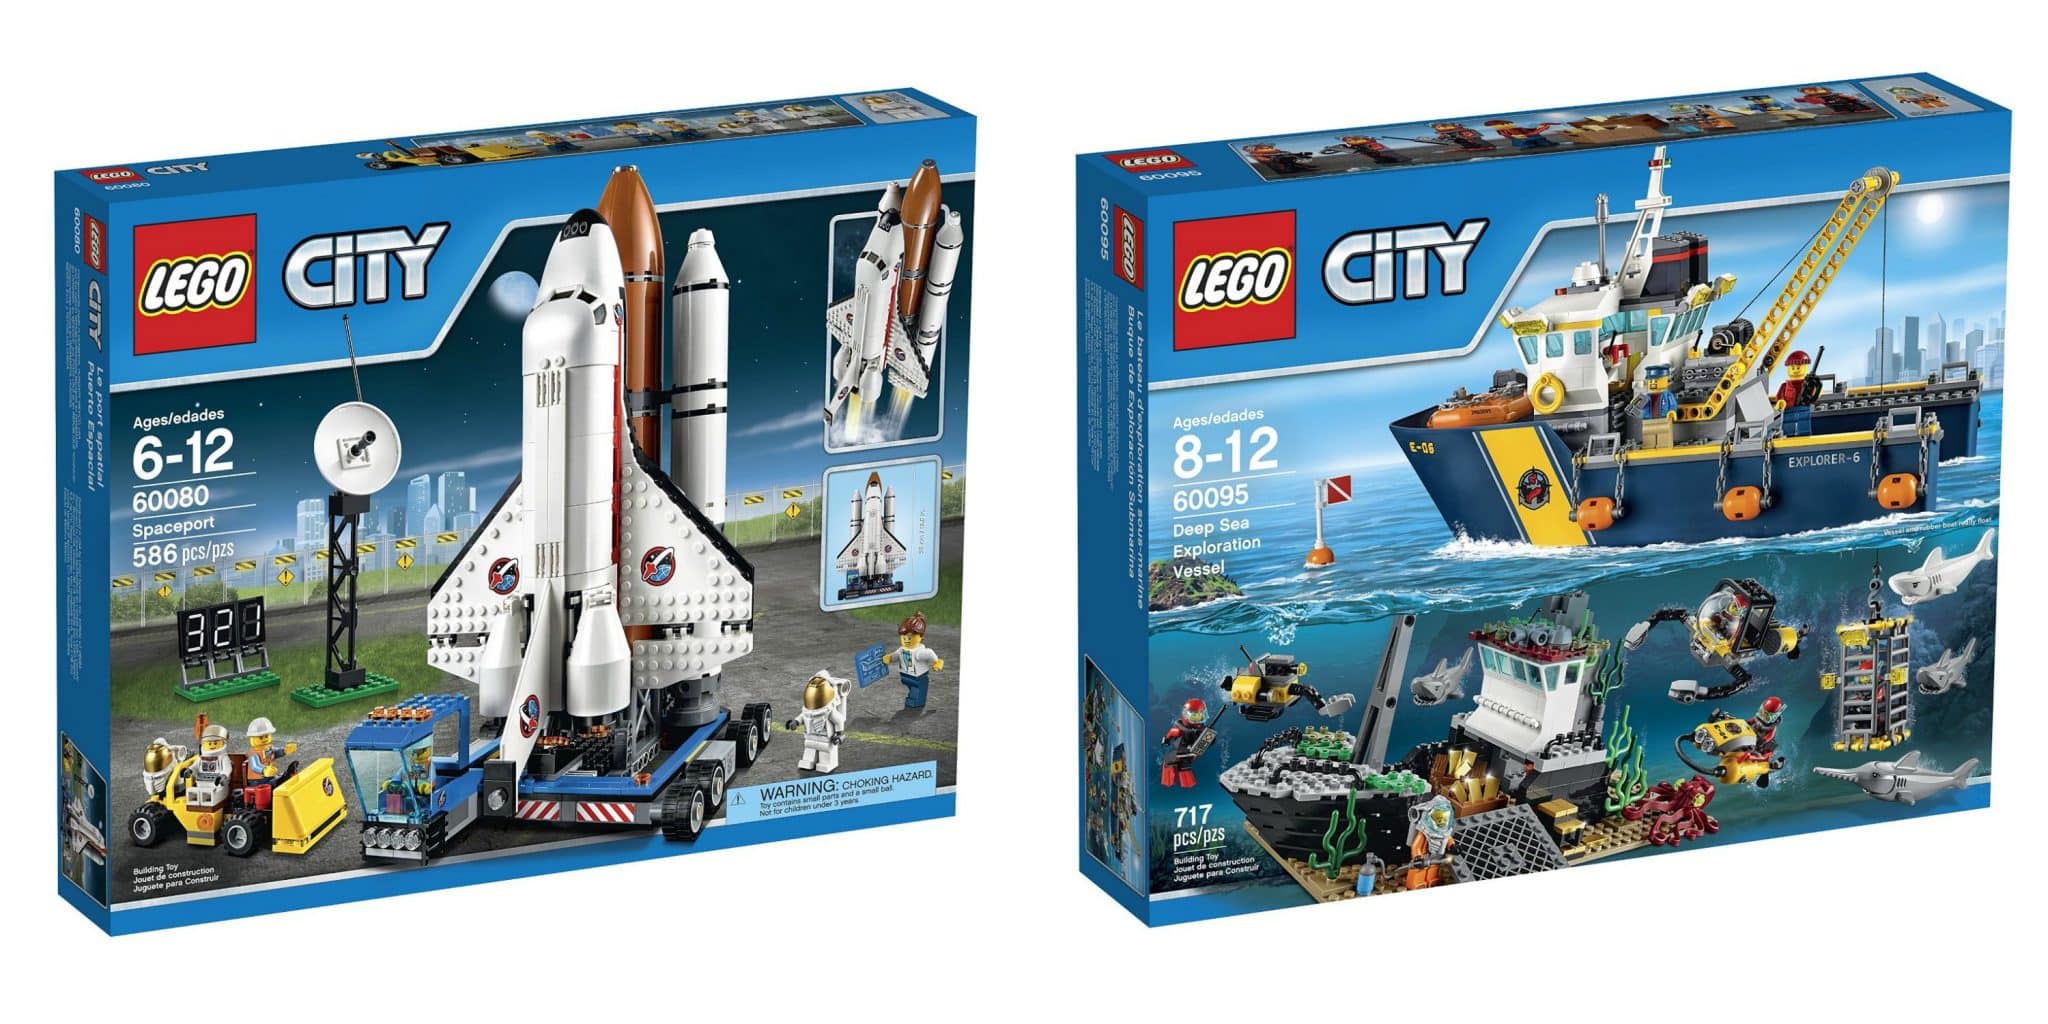 HOT Savings on LEGO City Sets on Amazon and Target.com!